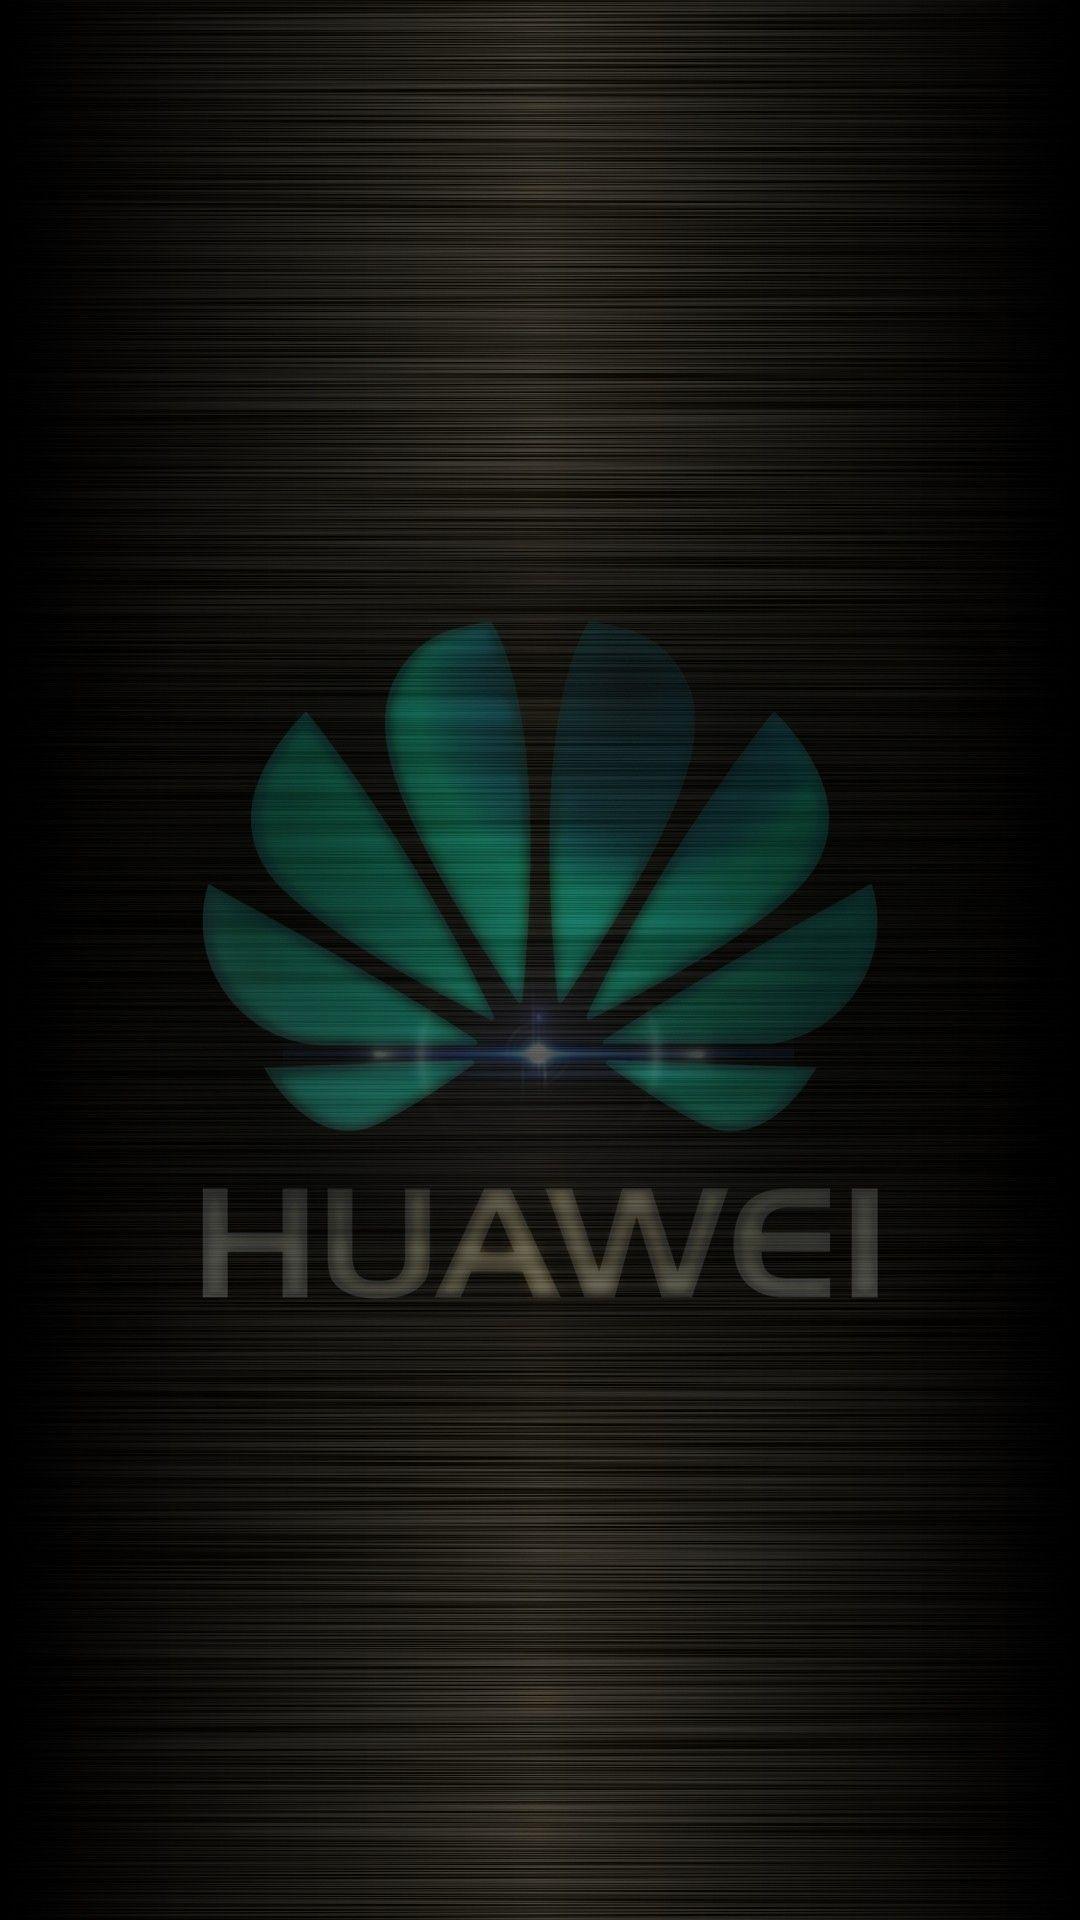 Huawei Smartphone Wallpaper Free Huawei Smartphone Background